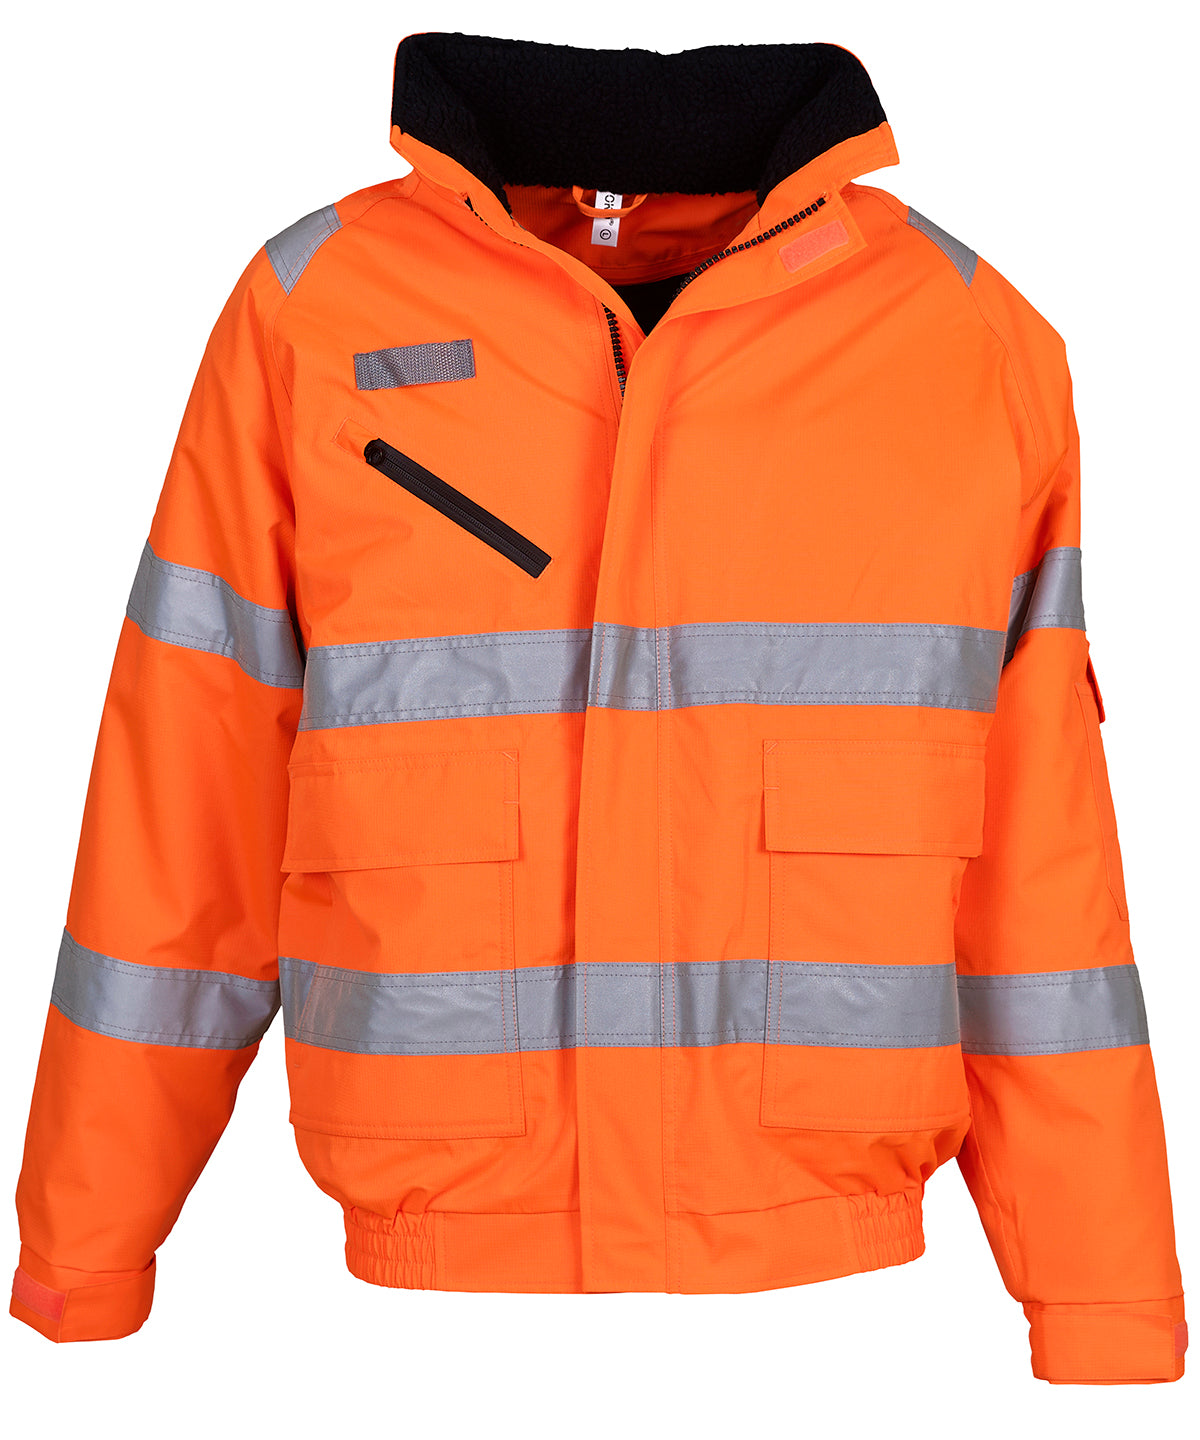 Orange - Hi-vis fontaine flight jacket (HVP209) Jackets Yoko New For 2021, New Styles For 2021, Plus Sizes, Safetywear, Workwear Schoolwear Centres